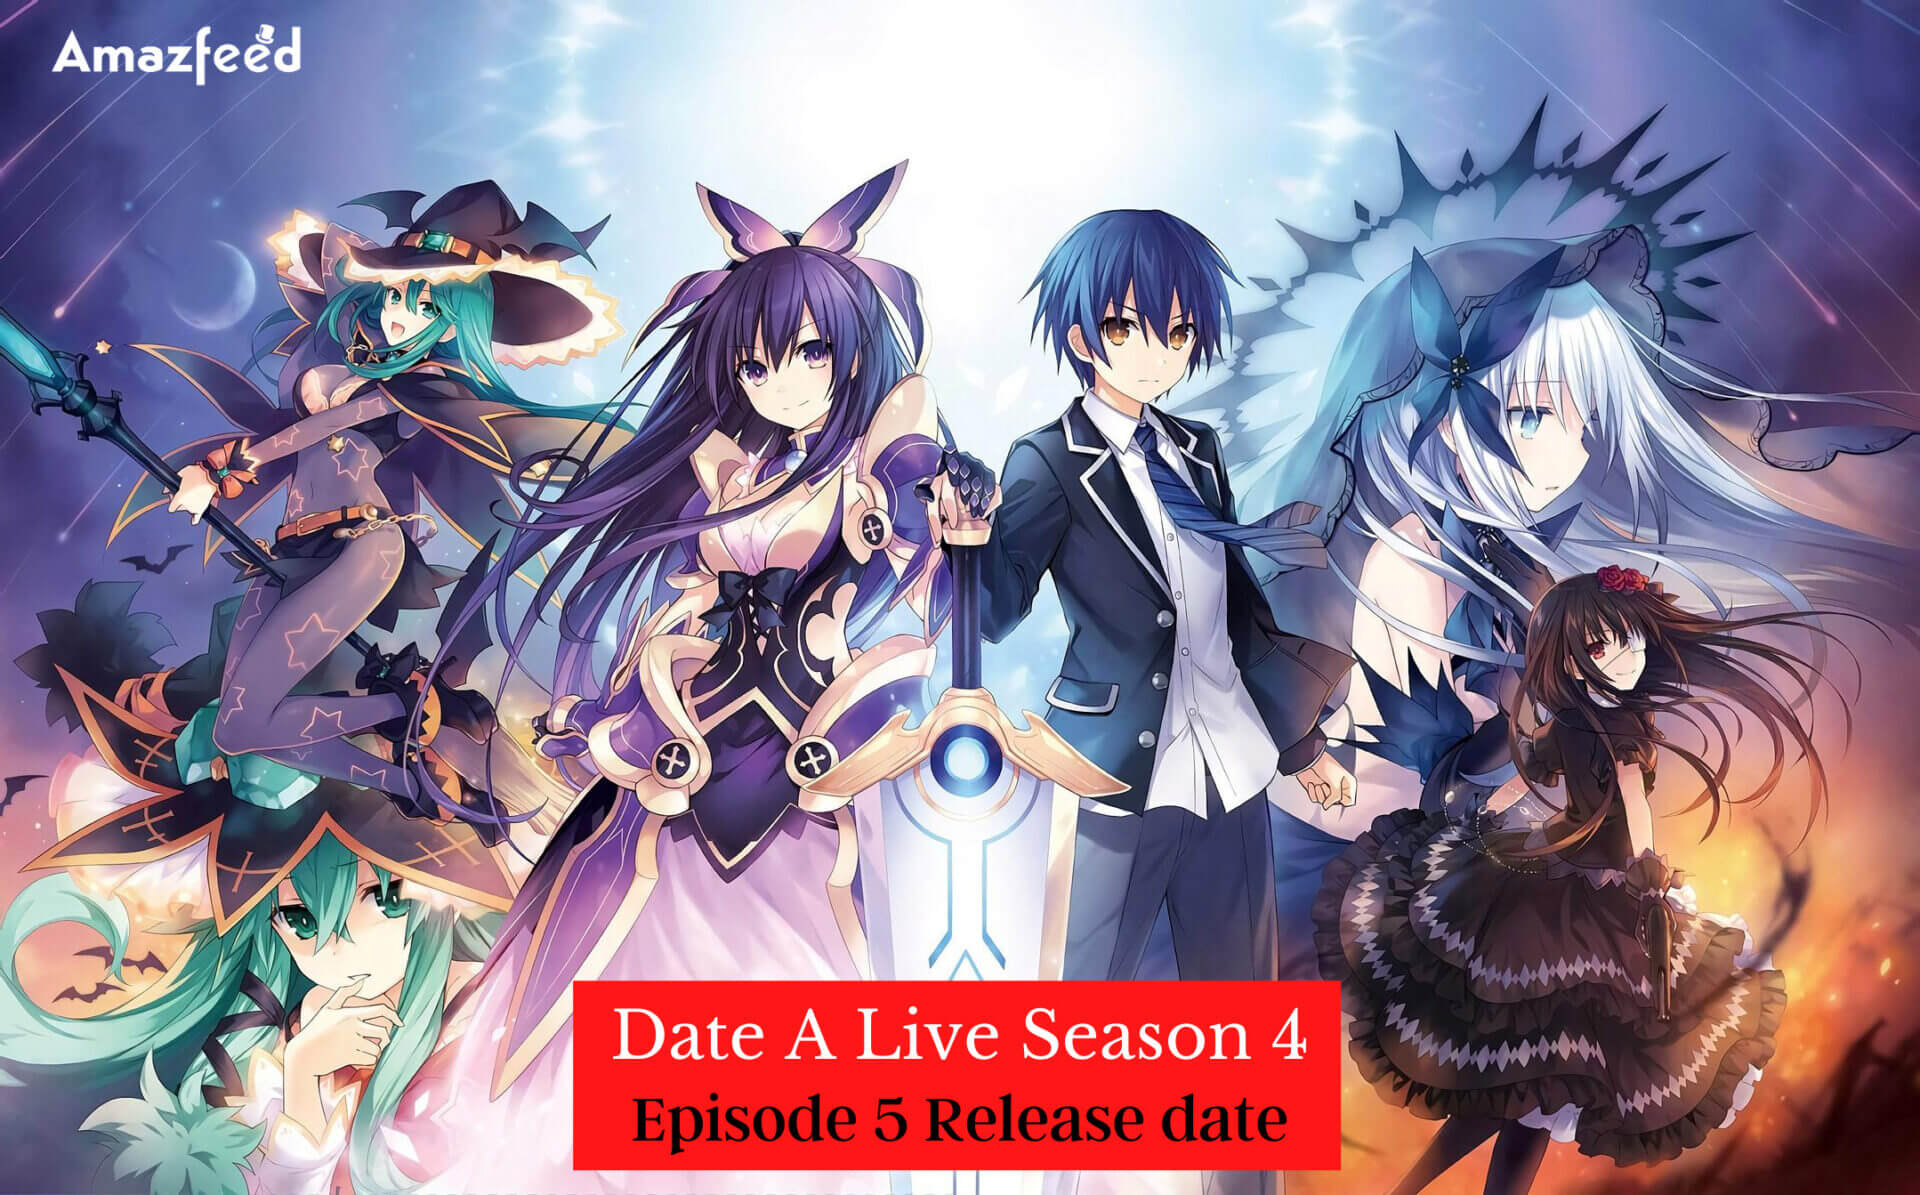 Date A Live Season 4 episode 5 release date